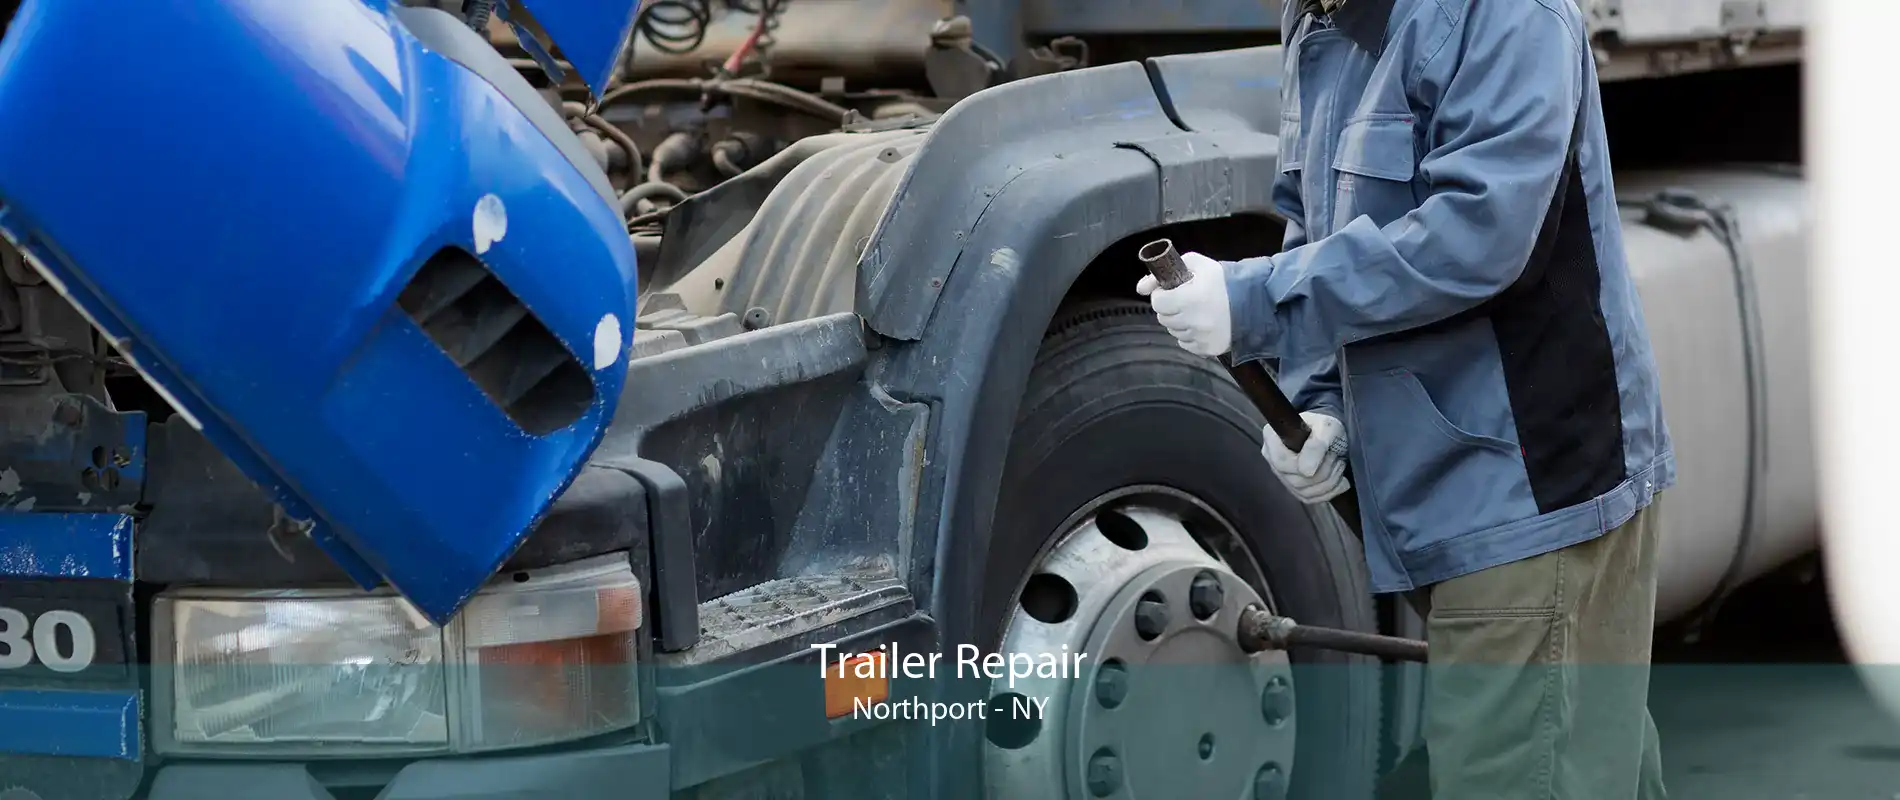 Trailer Repair Northport - NY